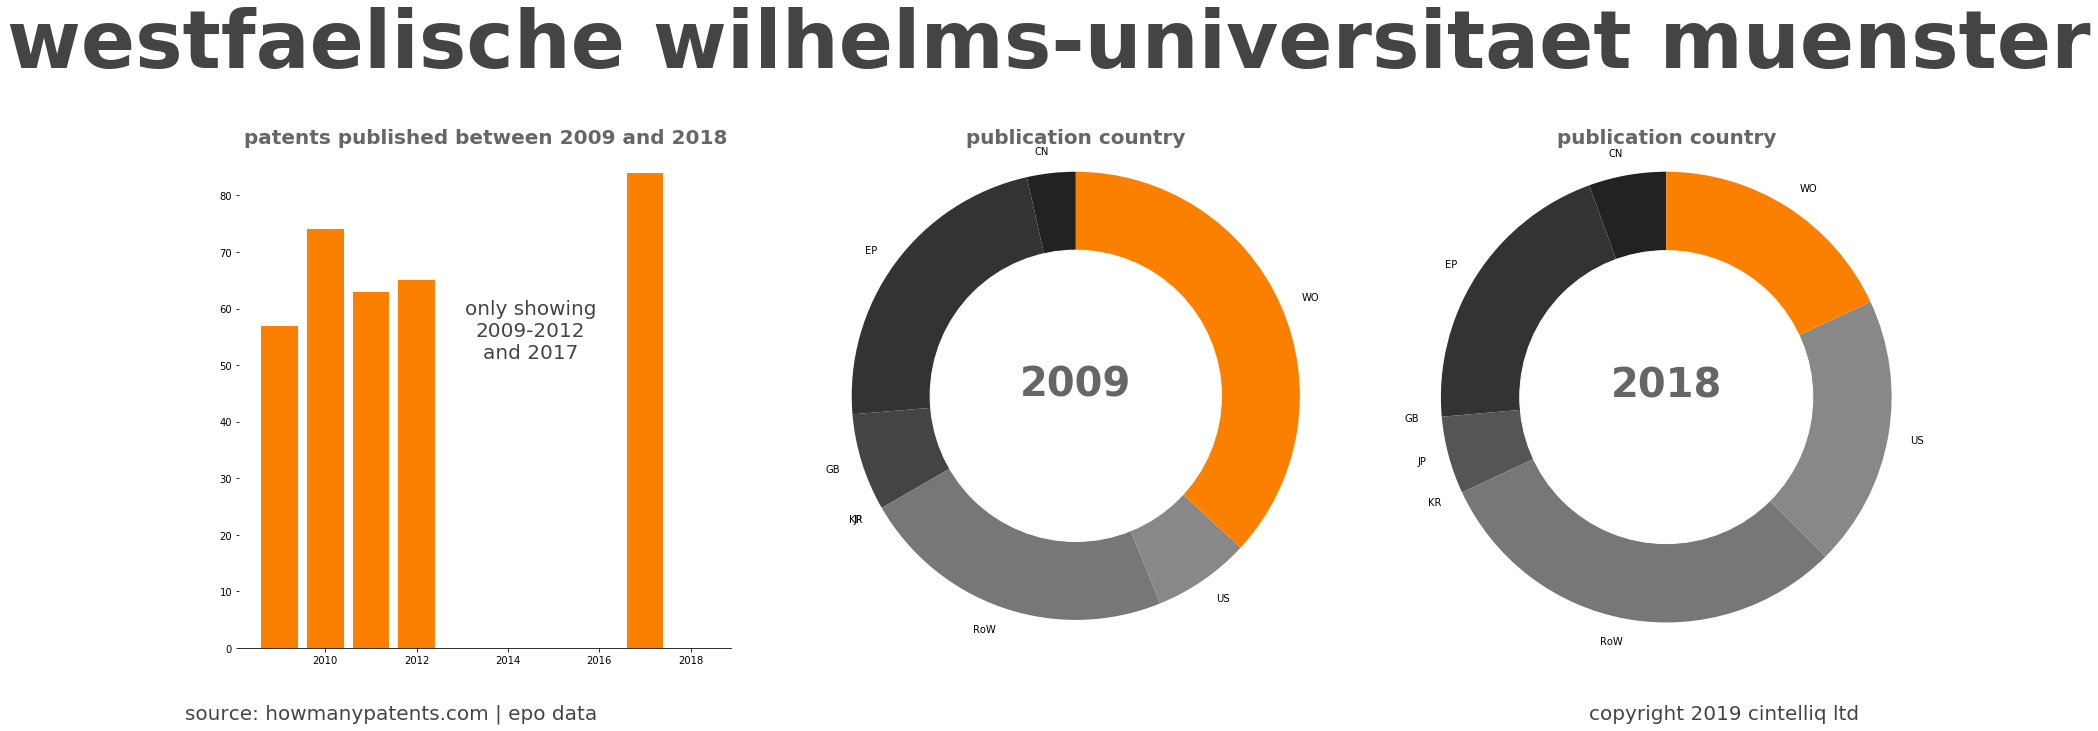 summary of patents for Westfaelische Wilhelms-Universitaet Muenster